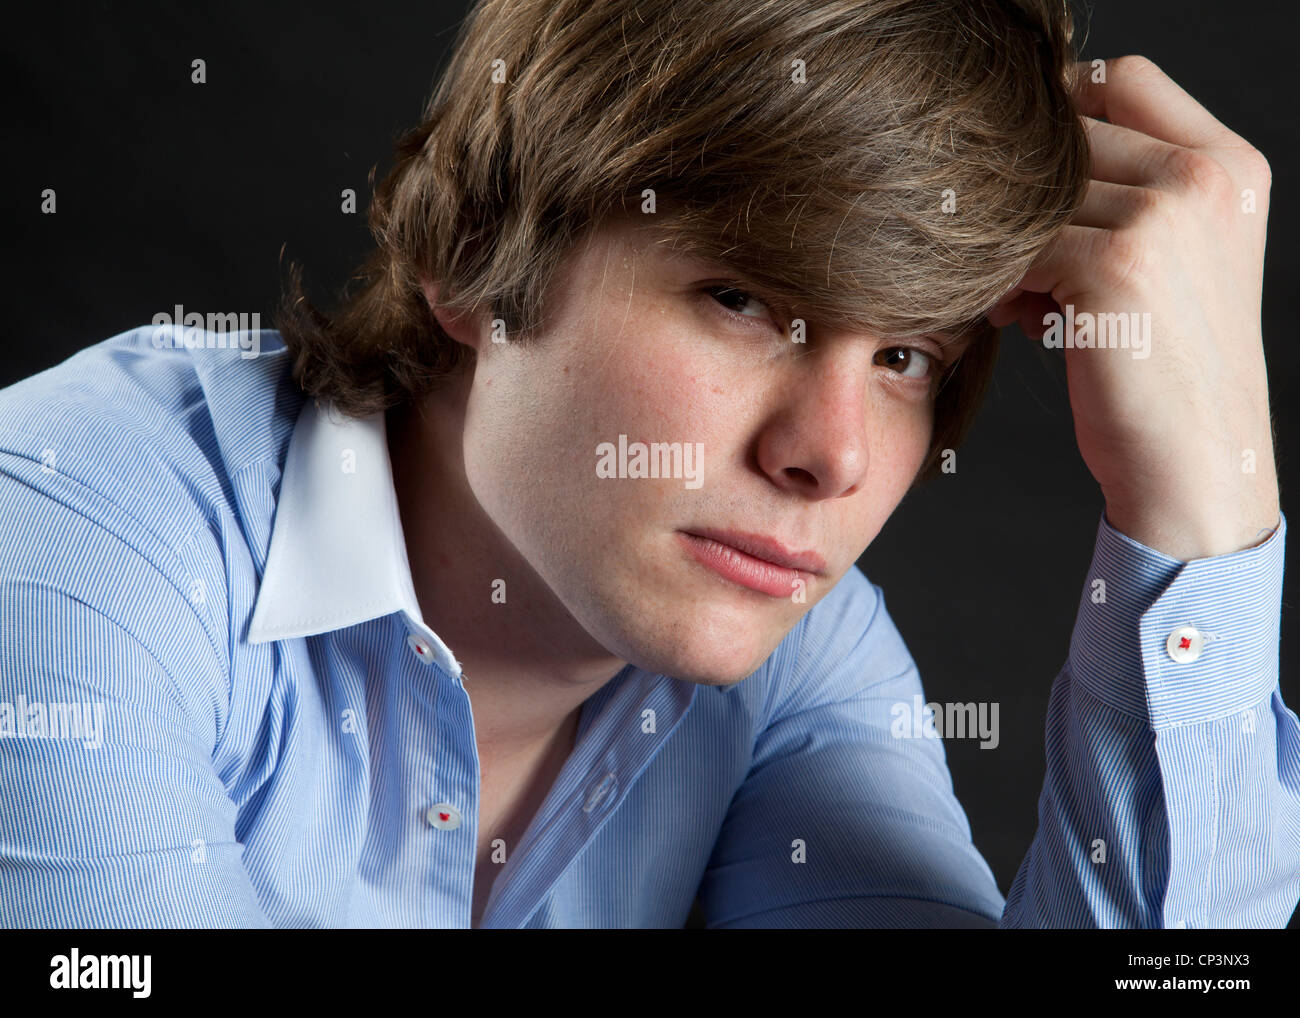 Colour headshot of male model wearing blue shirt photographed against black backdrop Stock Photo